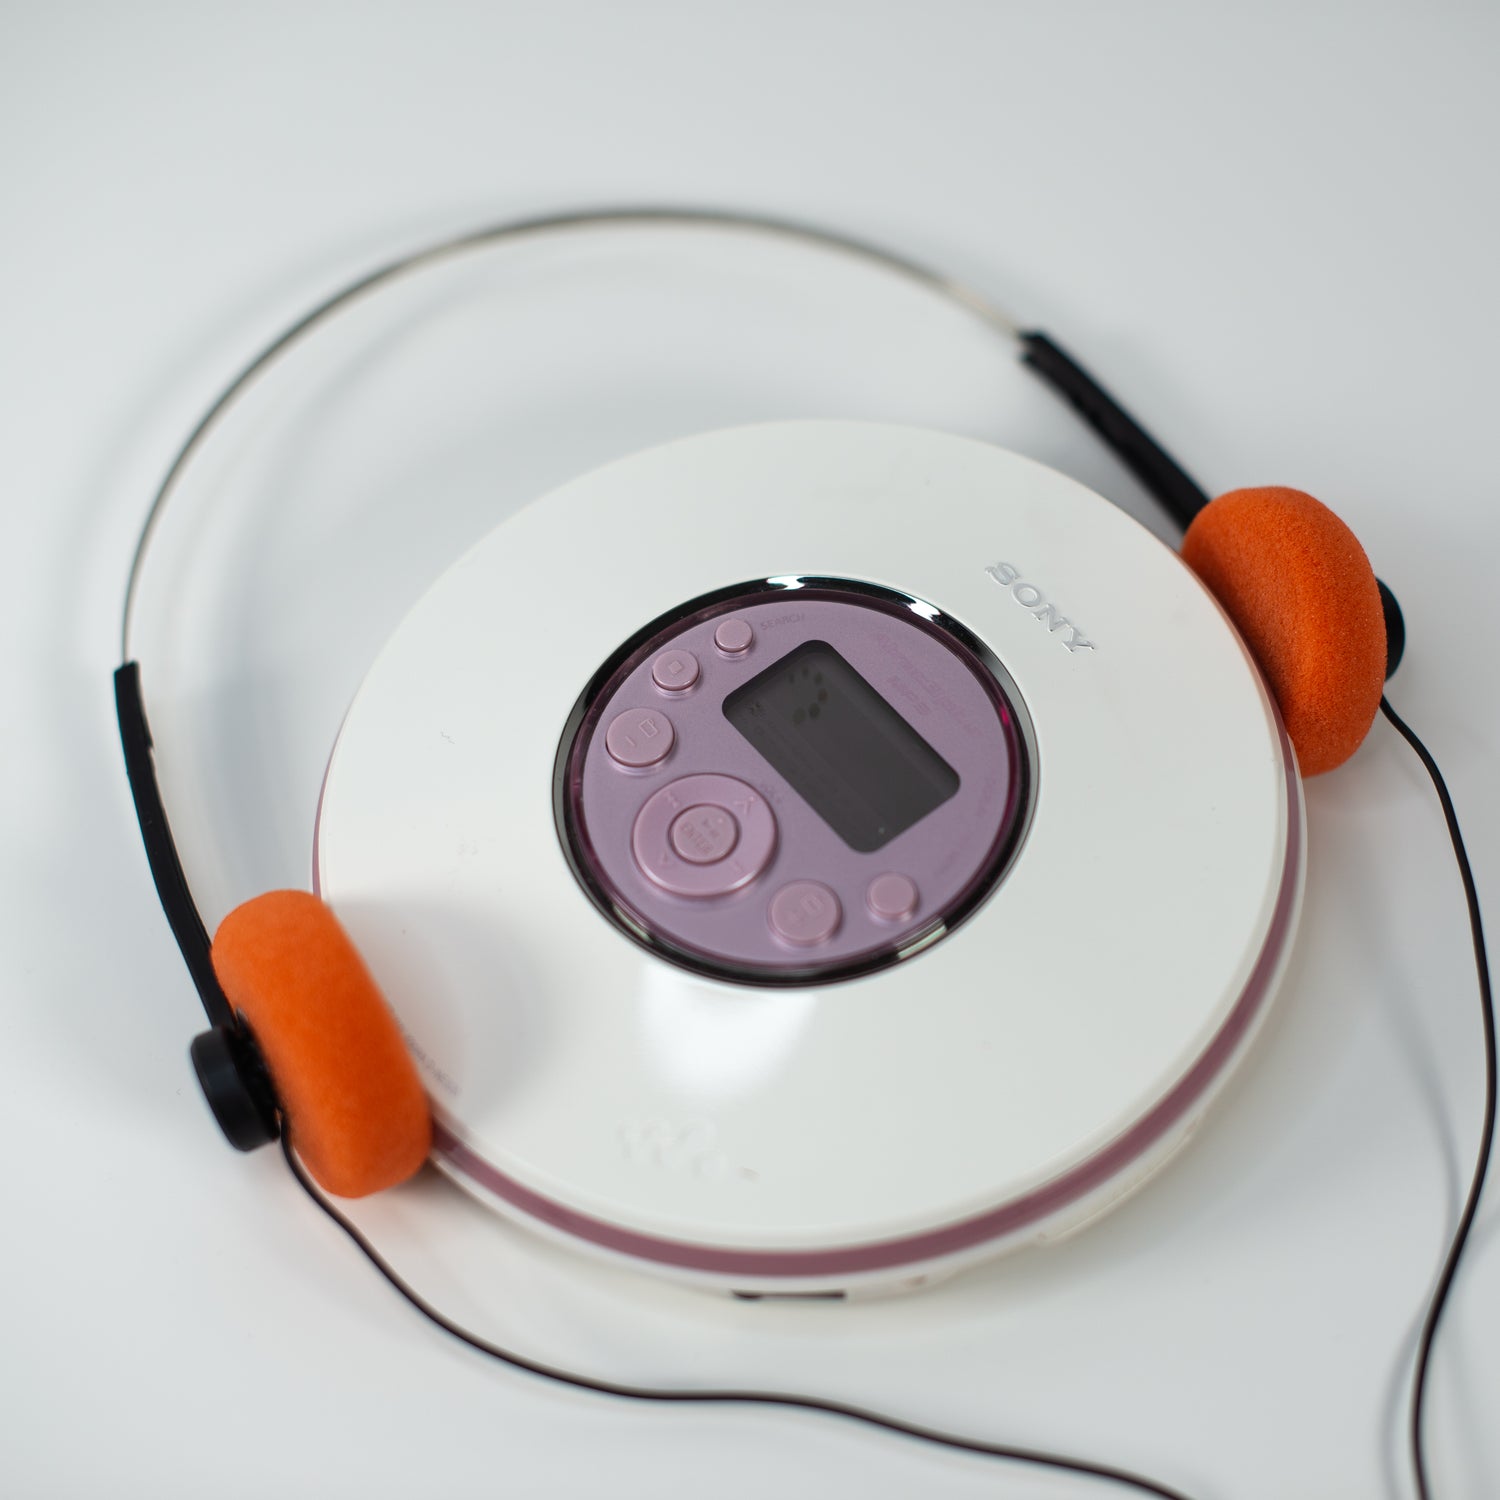 Sony D-NE320 PSYC MP3/ATRAC CD Walkman - Pink